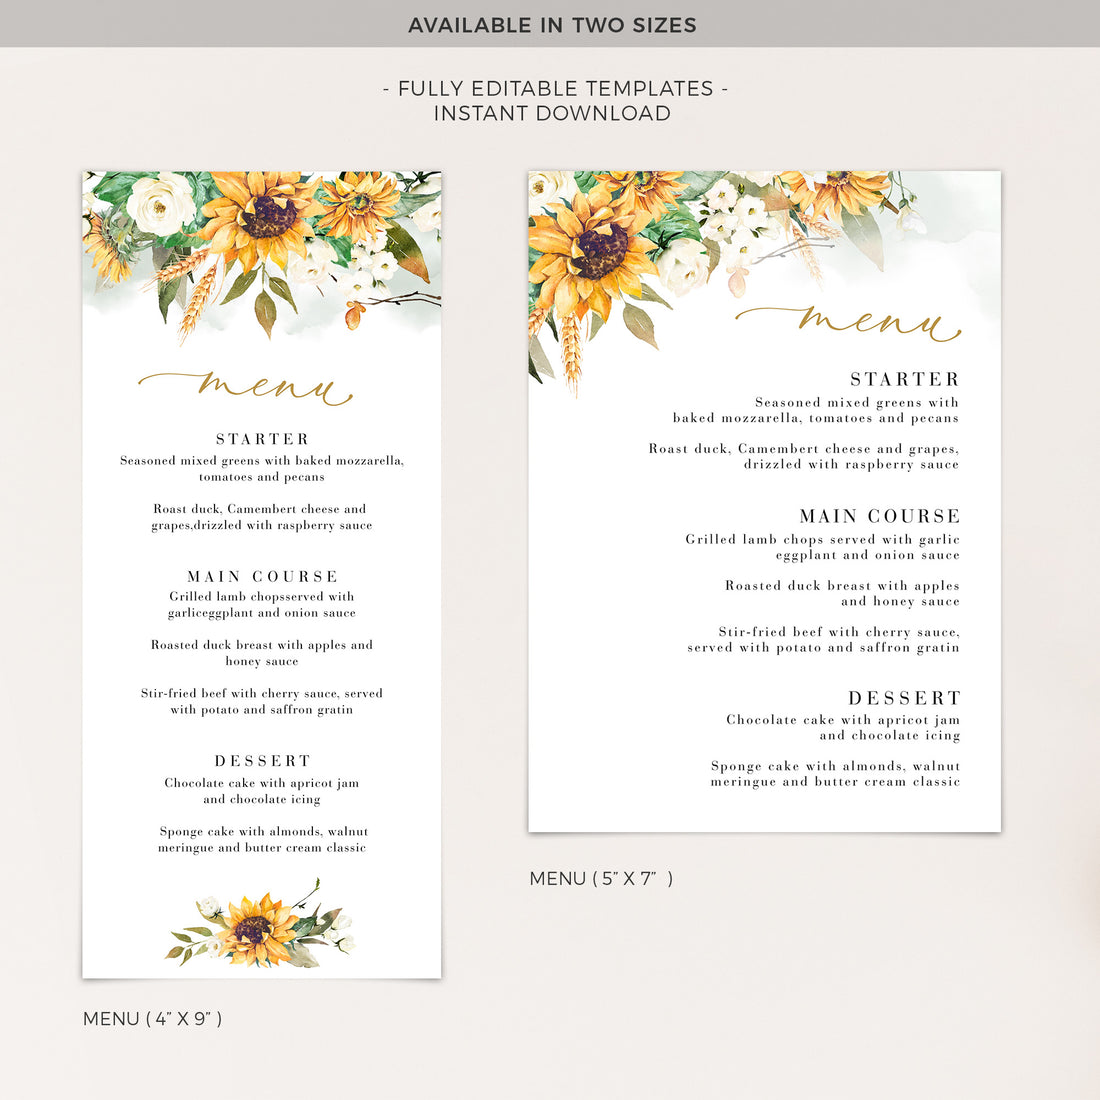 Marisol | Sunflowers Wedding Menu Template